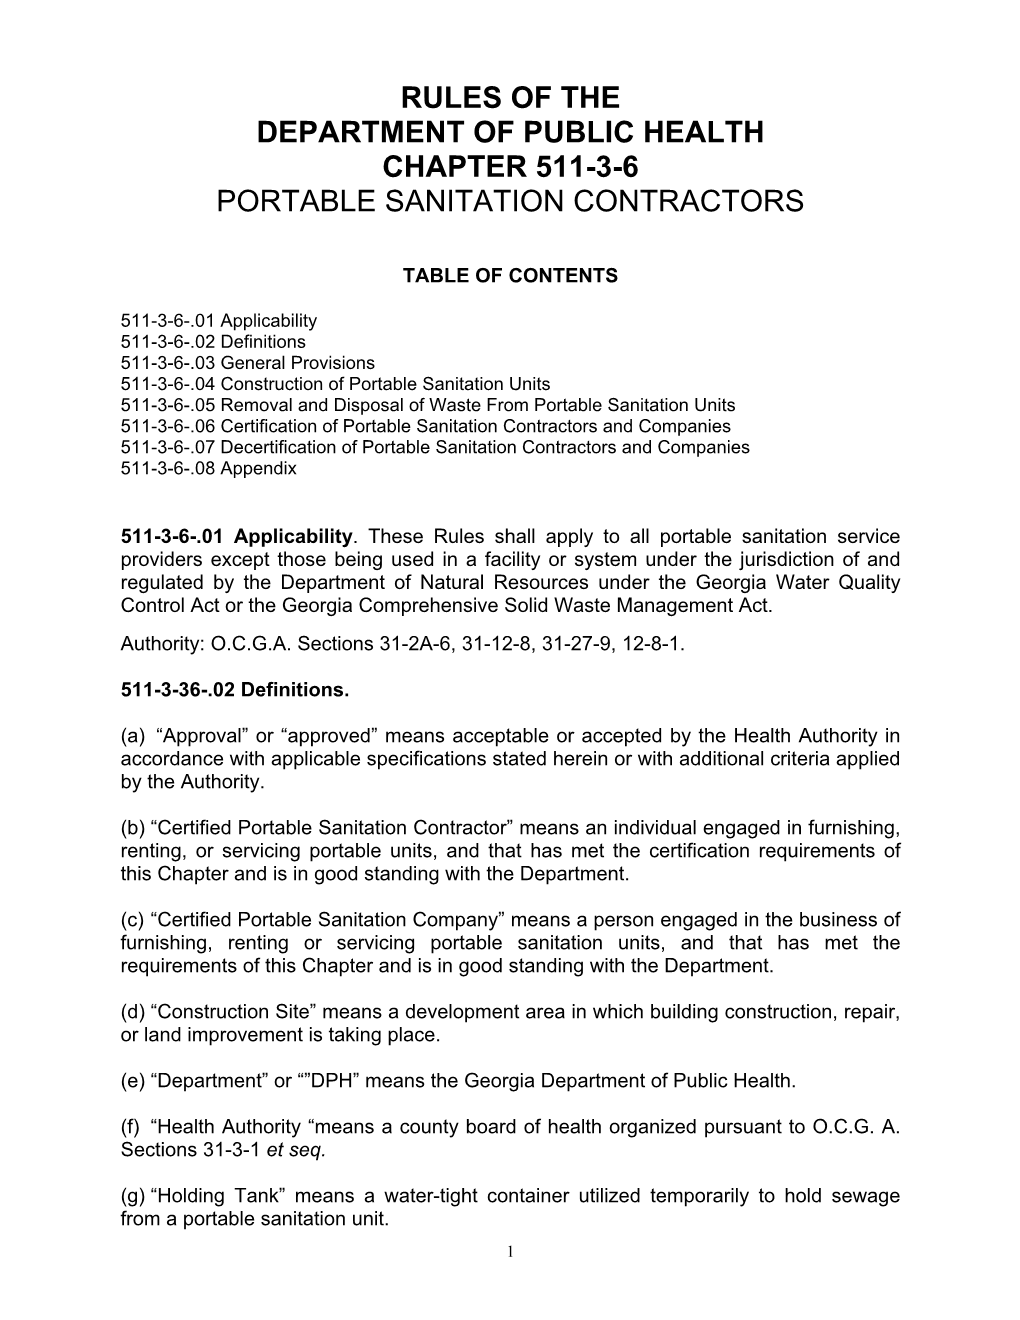 Rules for Portable Sanitation Contractors